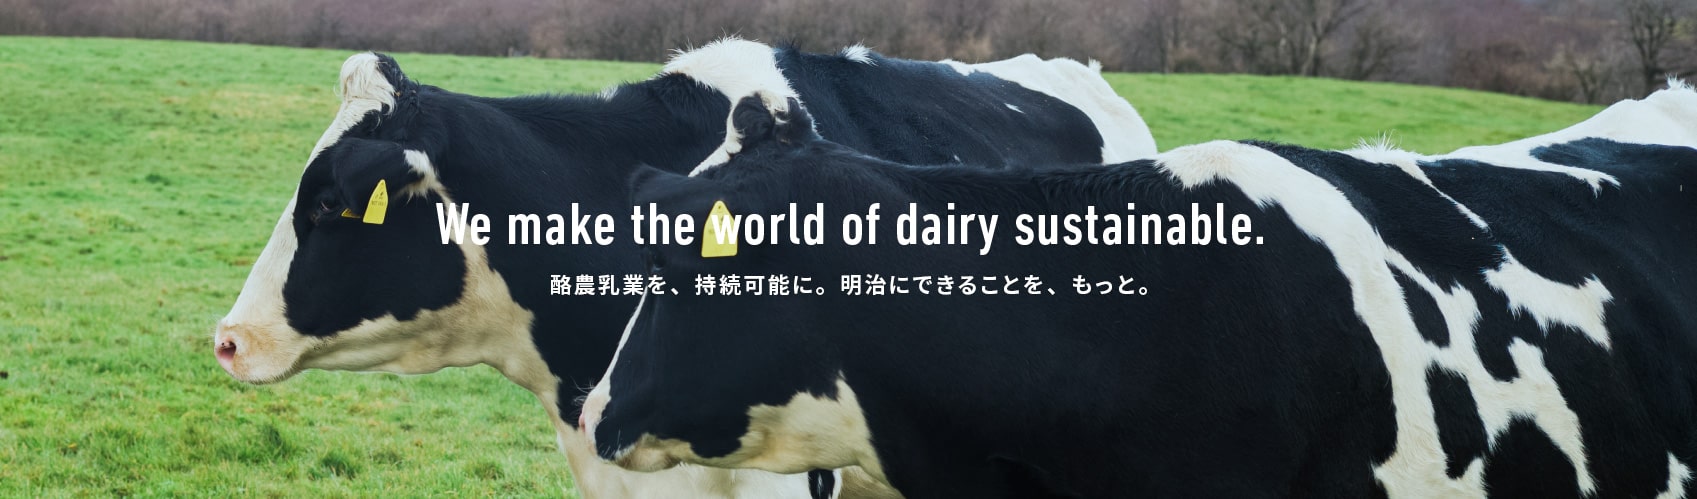 We make the world of dairy sustainable. 酪農乳業を、持続可能に。明治にできることを、もっと。